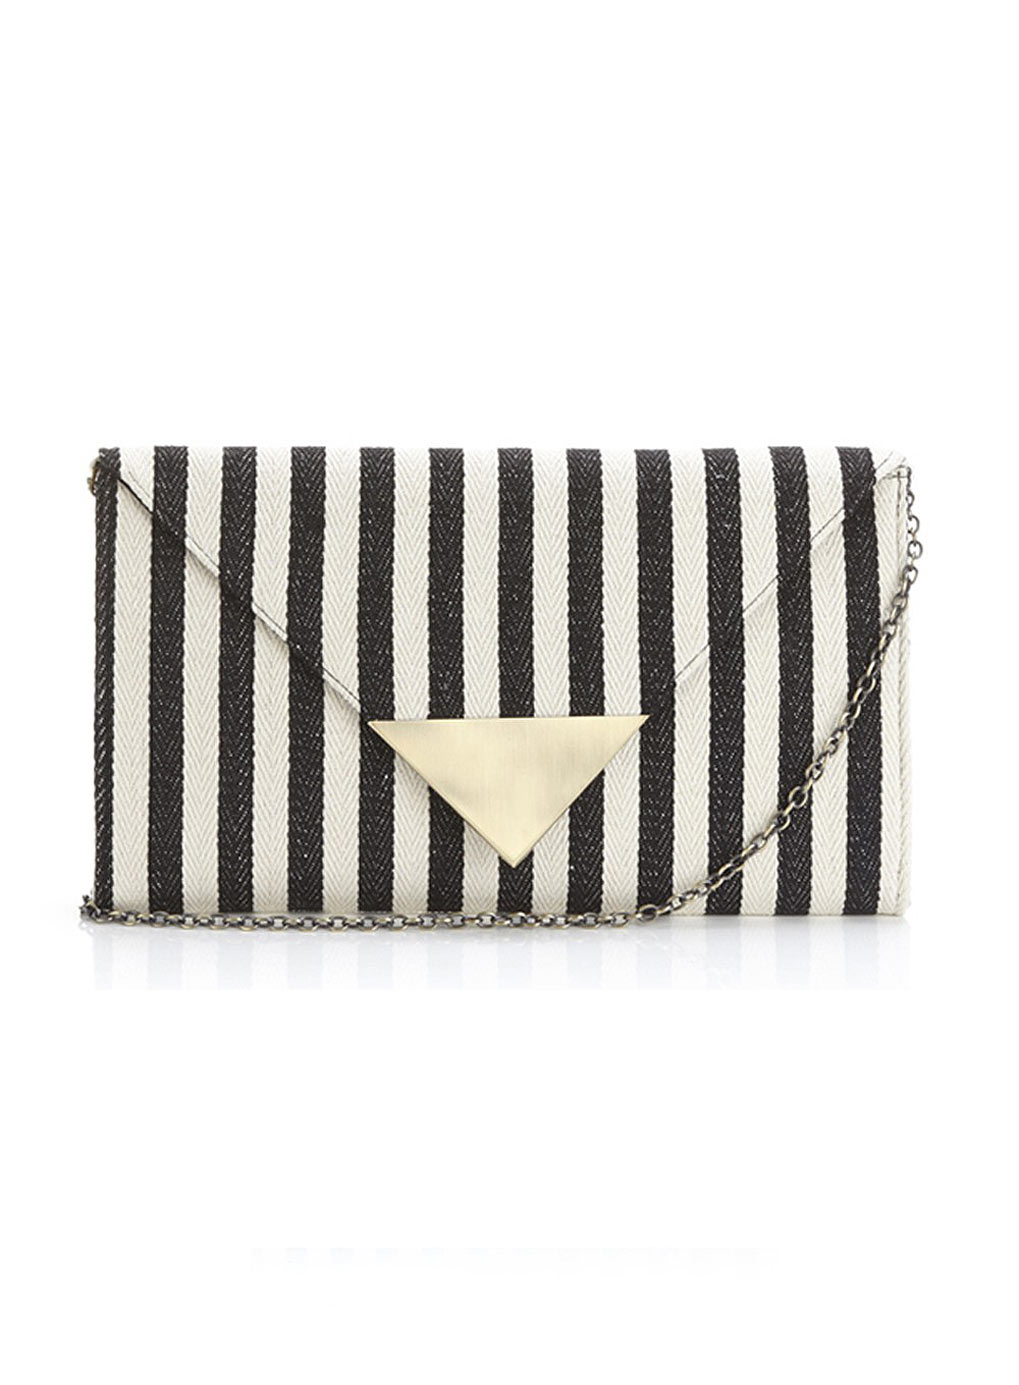 Dorothy Perkins Black Striped Clutch Bag 68110004